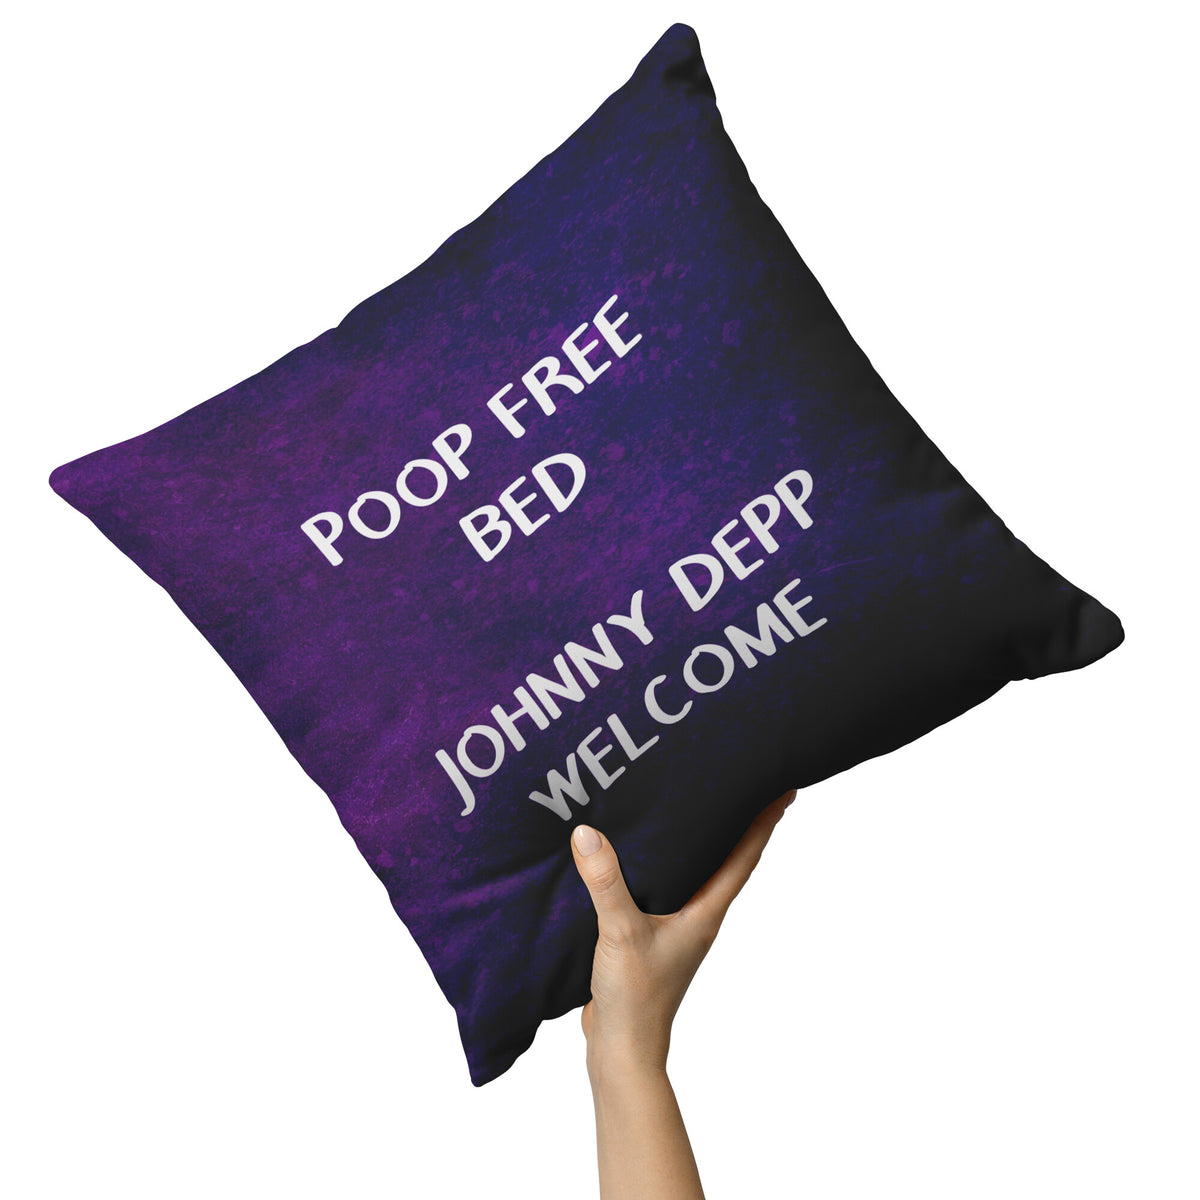 Johnny Depp Pillow